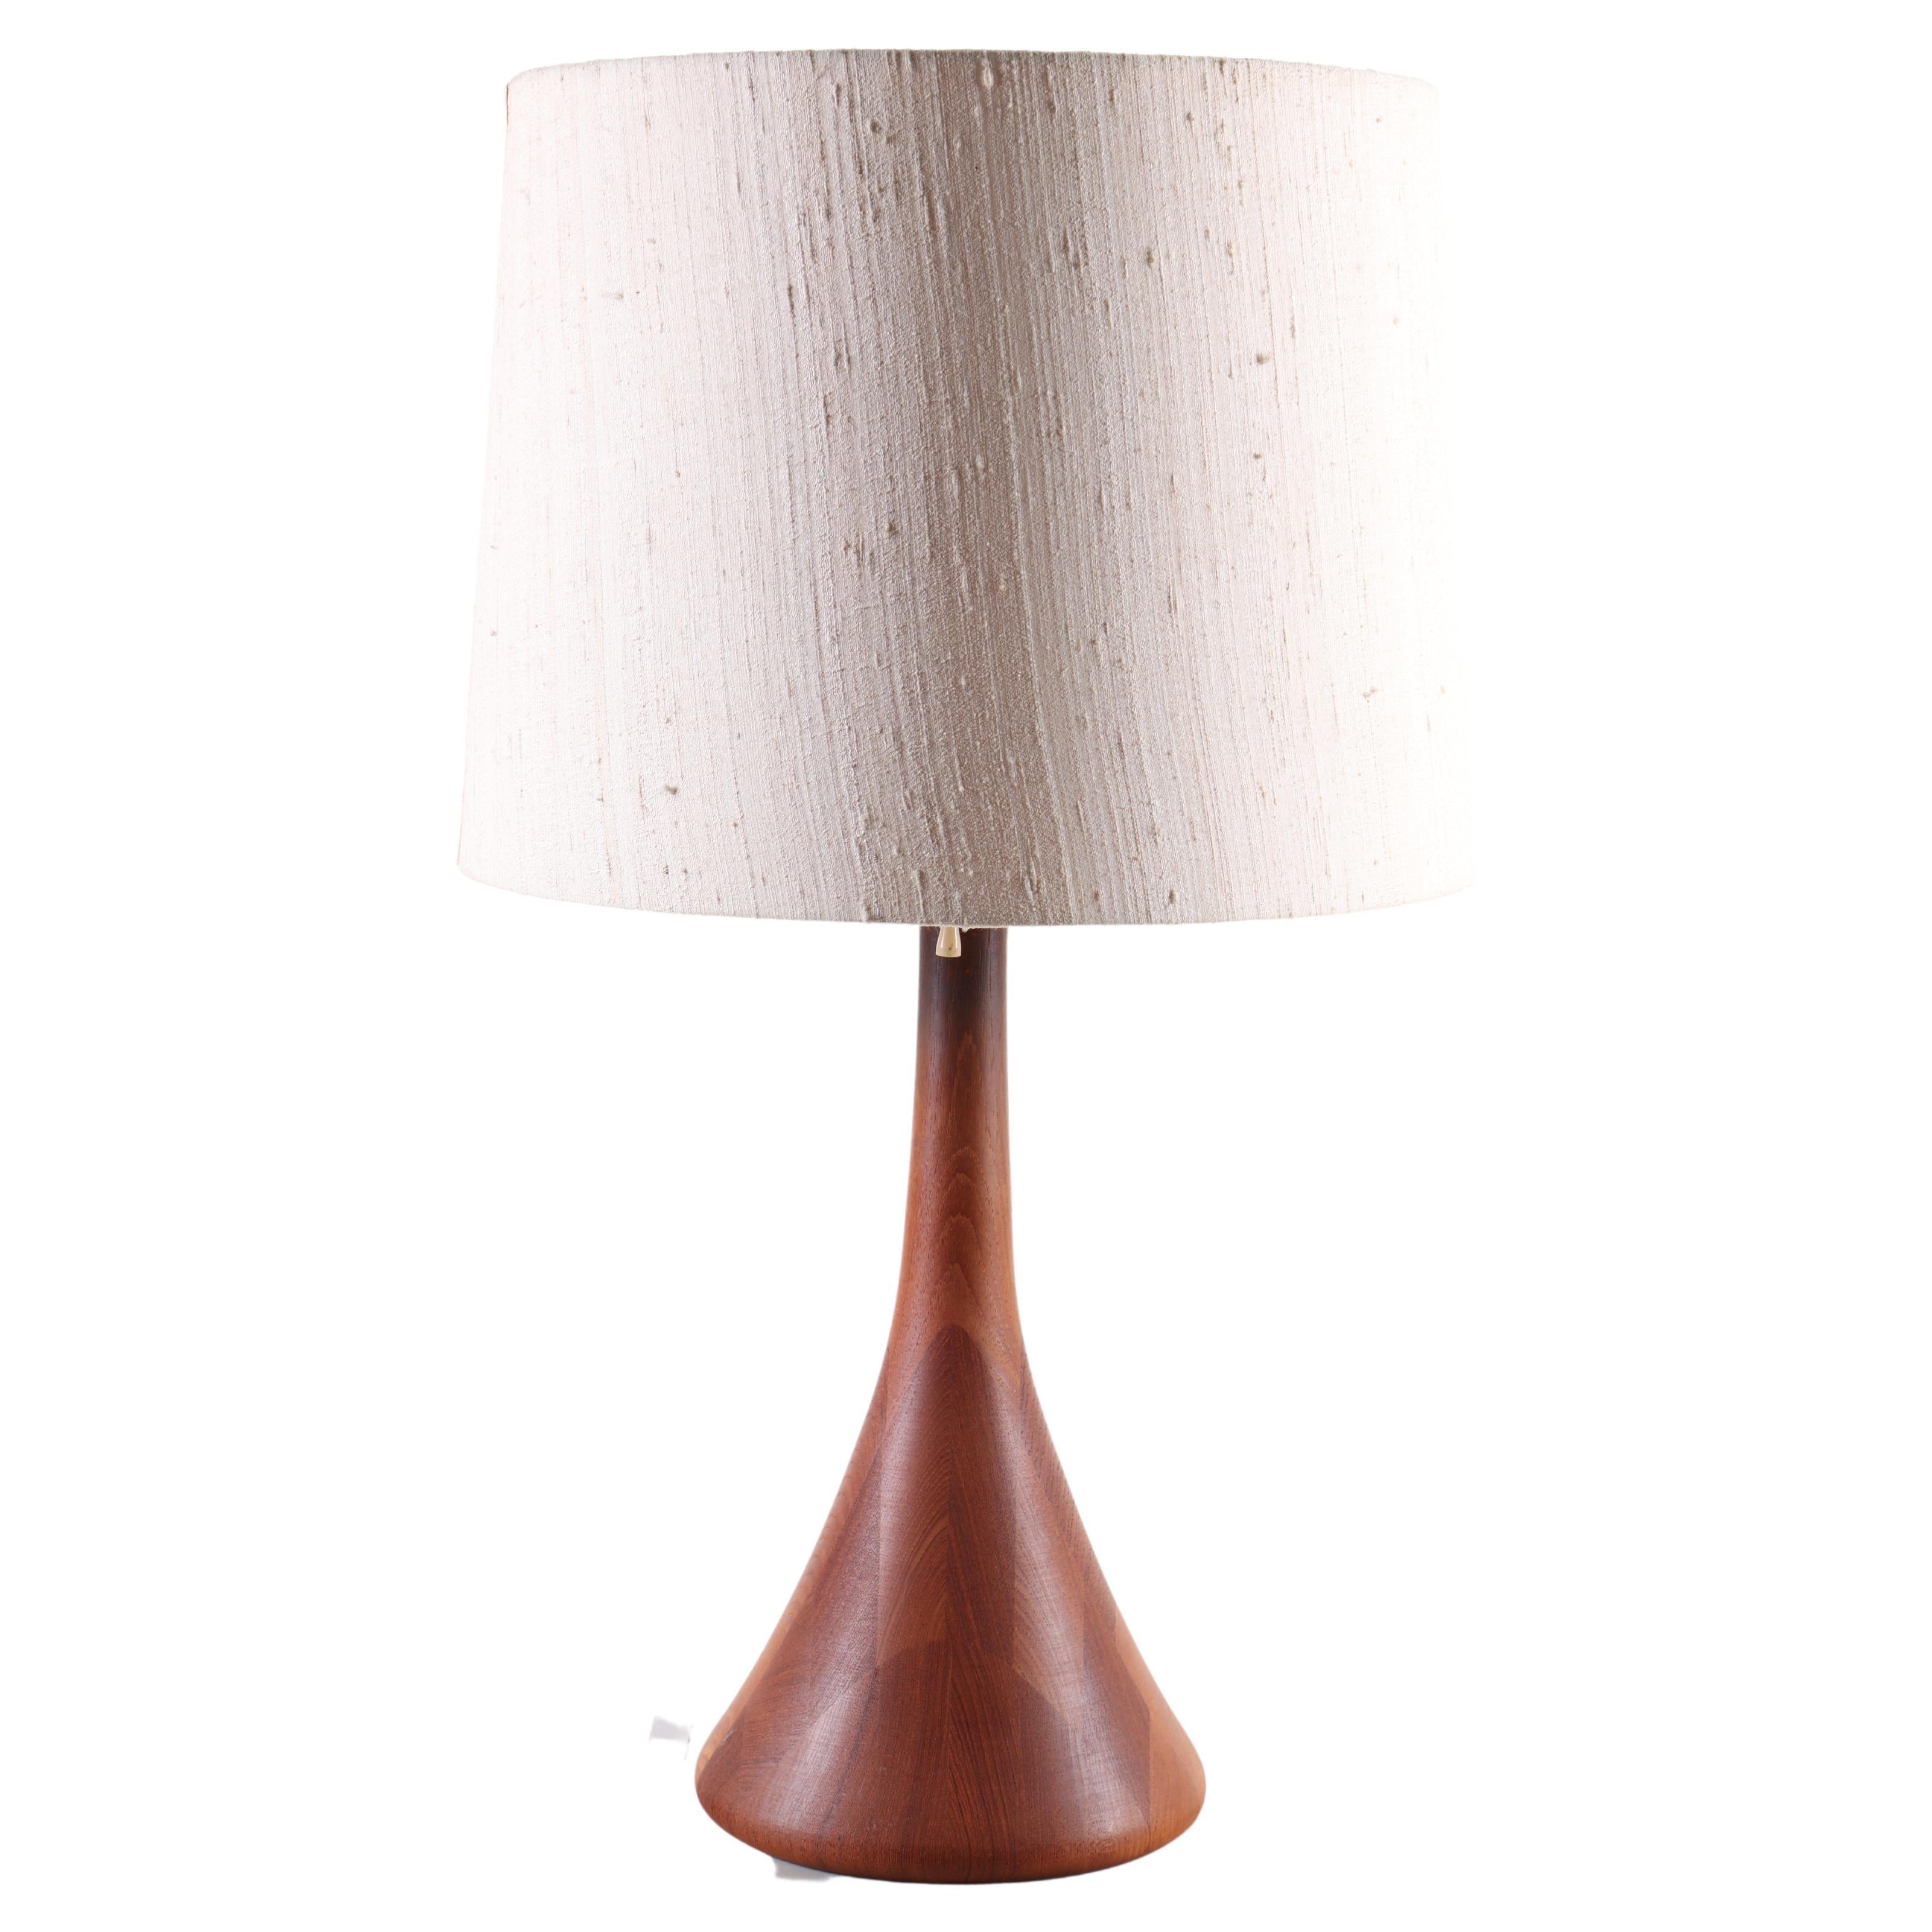 Mid-Century Scandinavian Table Lamp in Solid Teak, Made in Denmark 1960s For Sale